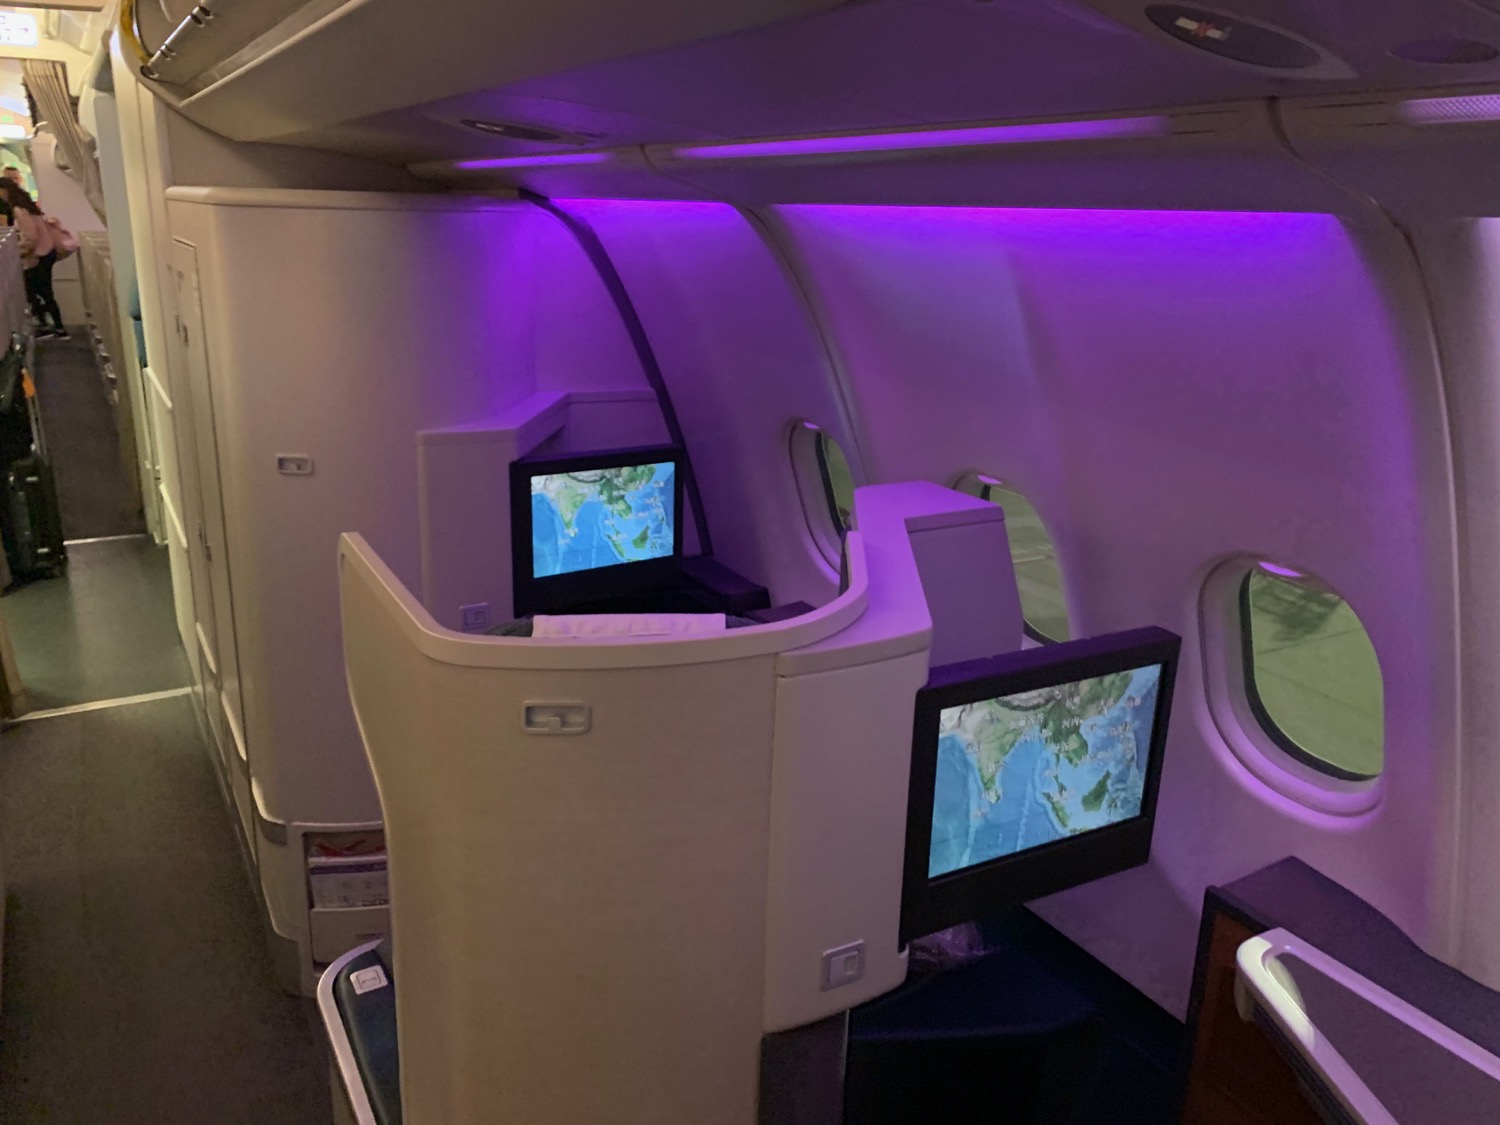 a plane with a purple light